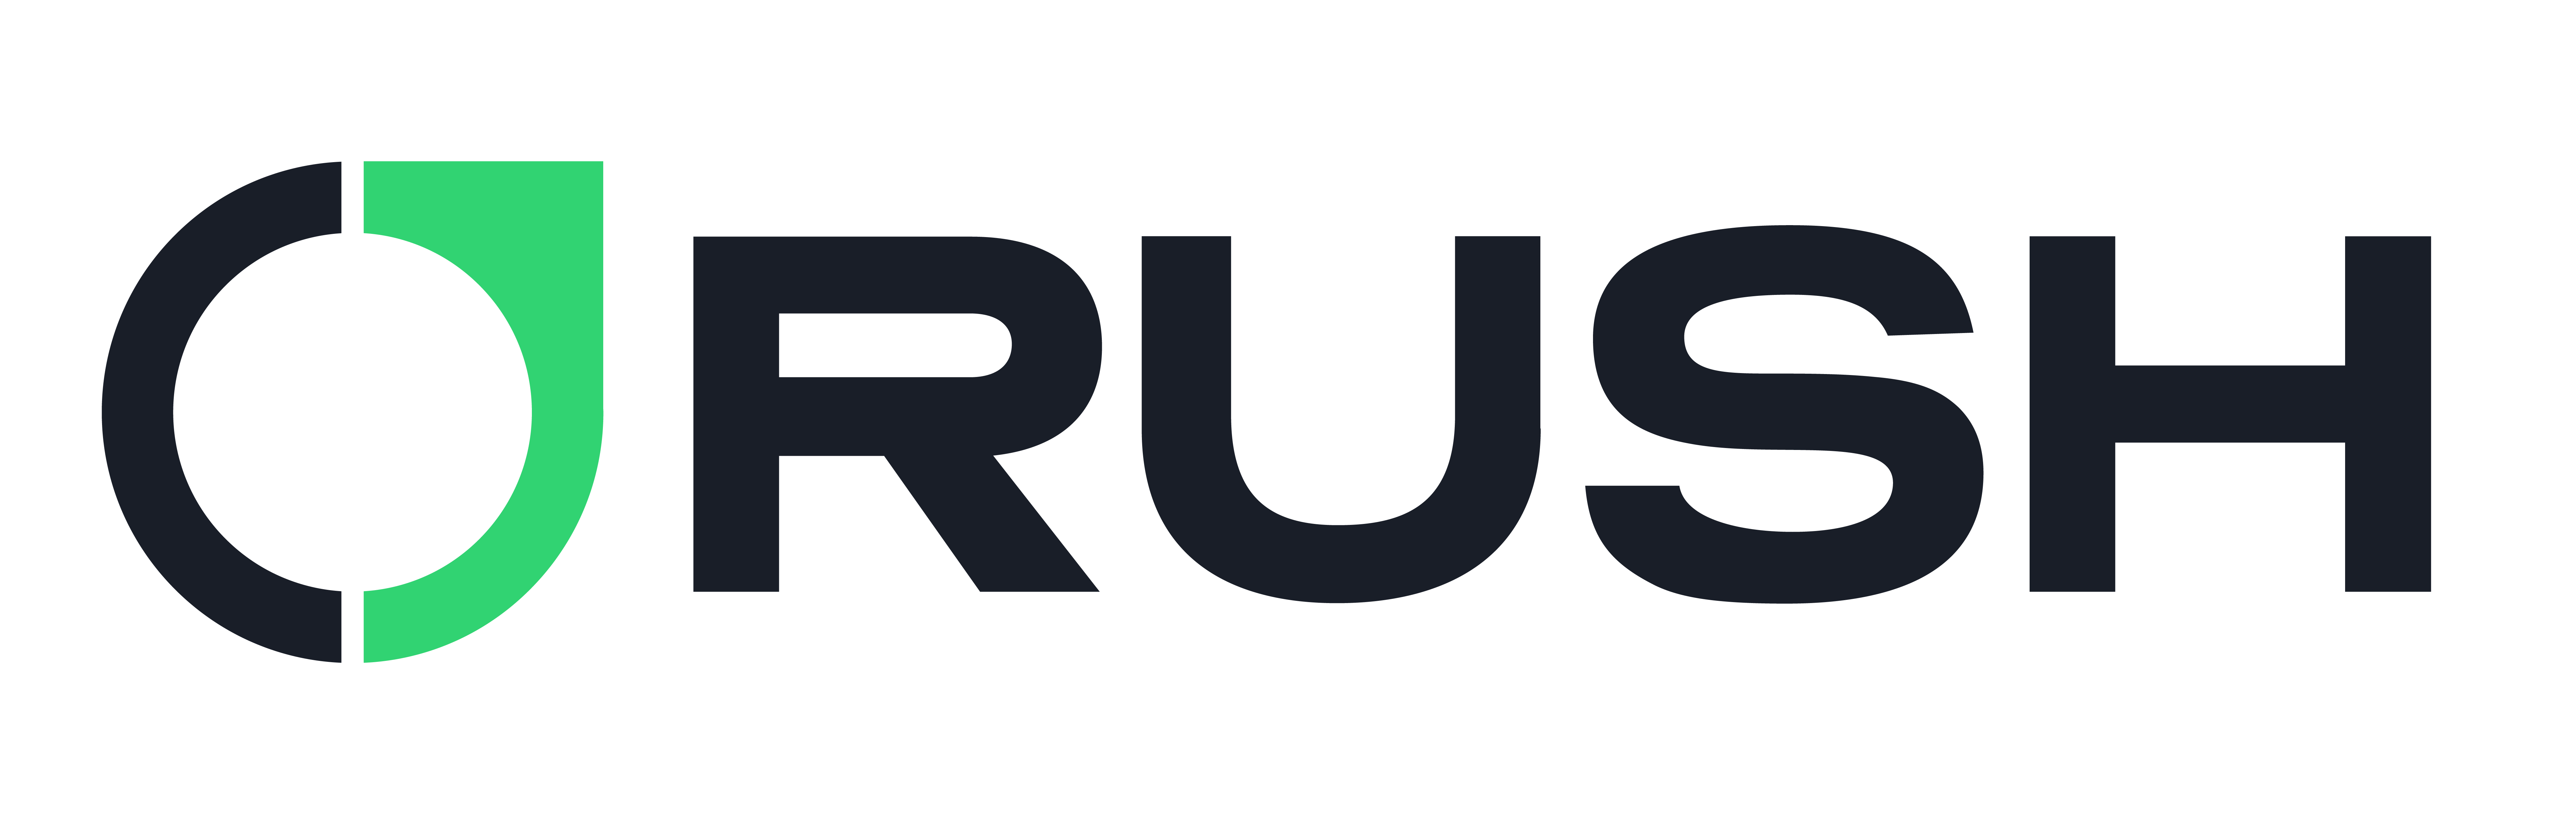 cj rush logo